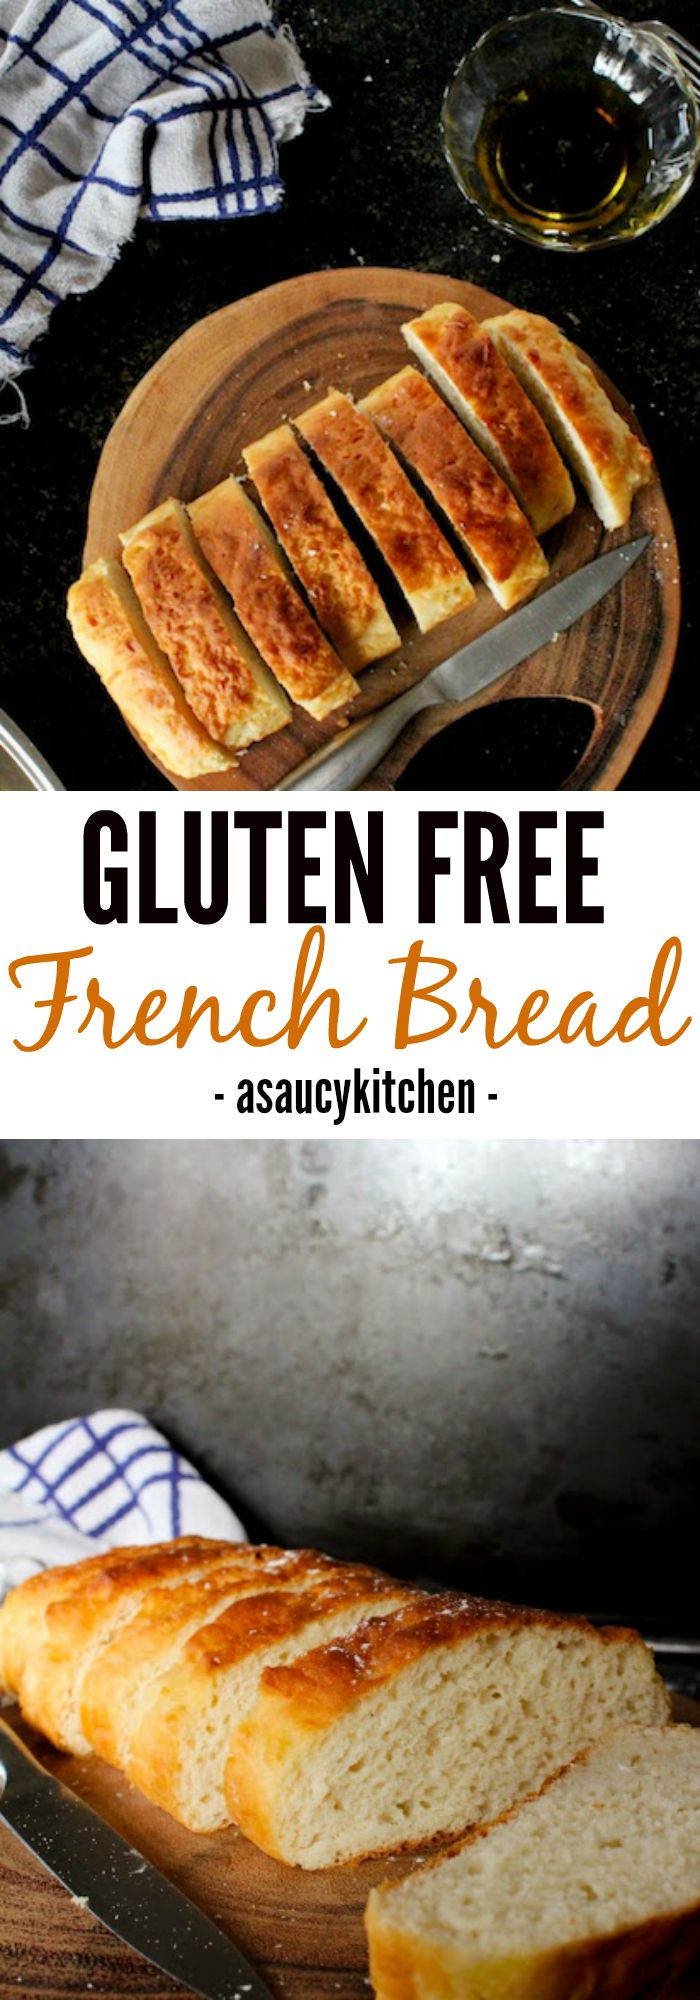 Gluten Free French Bread
 Easy Gluten Free French Bread